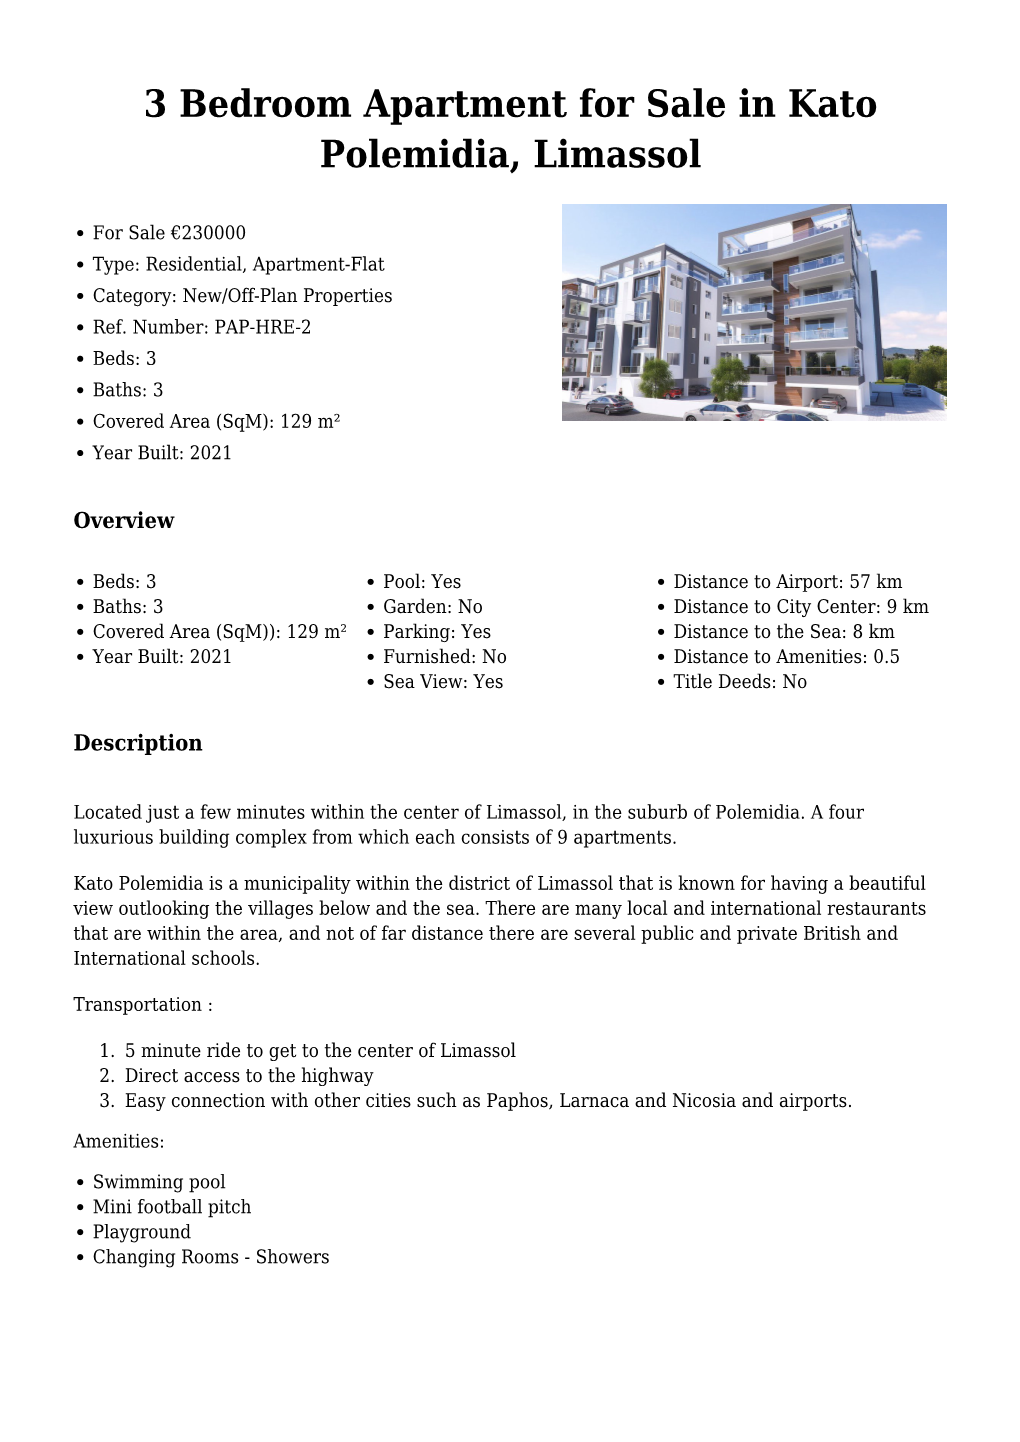 3 Bedroom Apartment for Sale in Kato Polemidia, Limassol